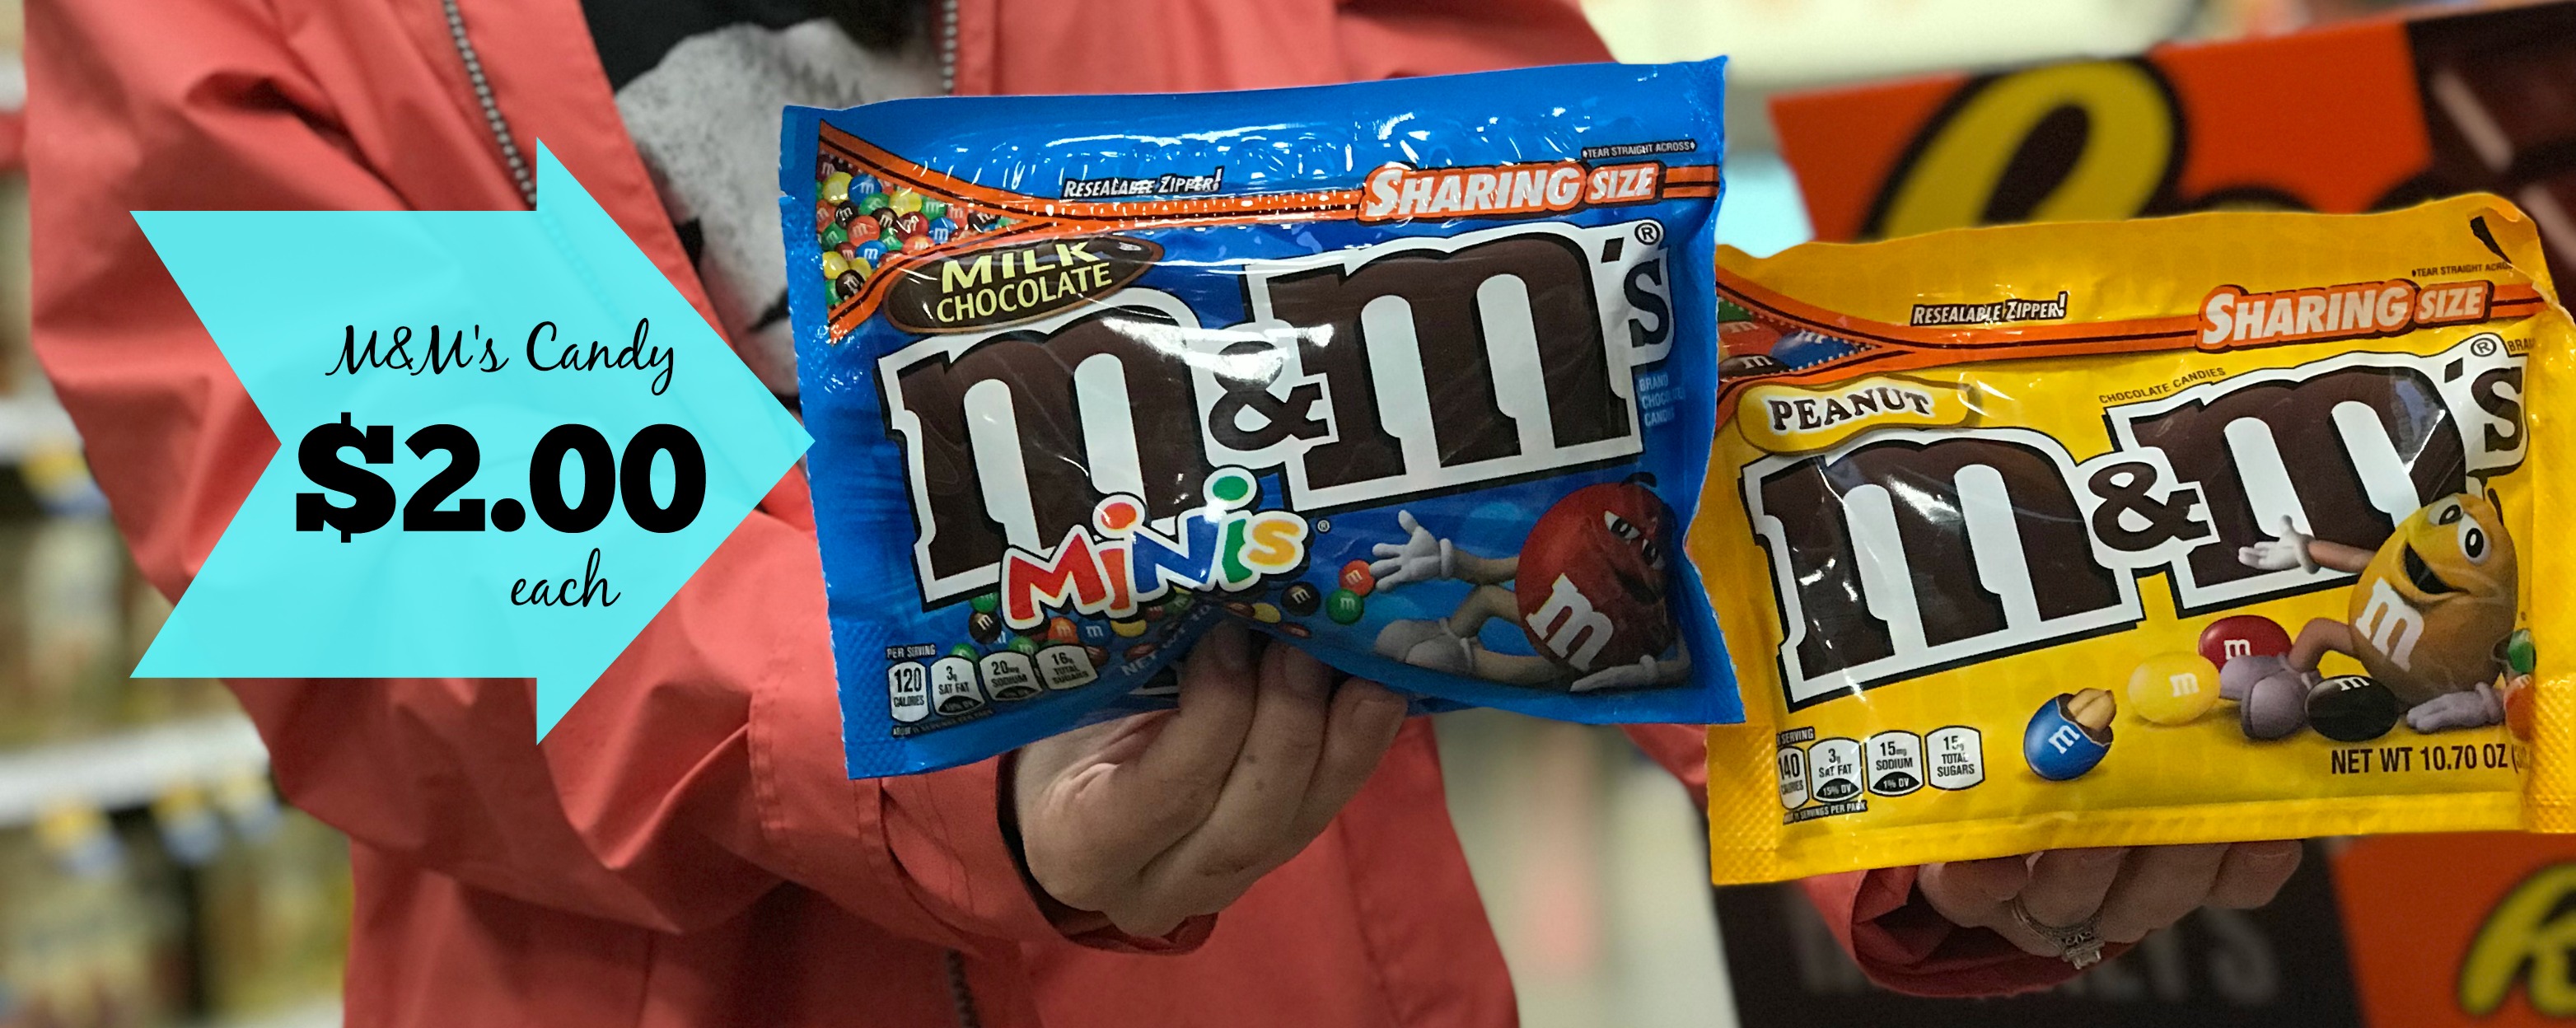 M&M'S Minis Milk Chocolate Candy Sharing Size Bag, 10.1 oz - Kroger